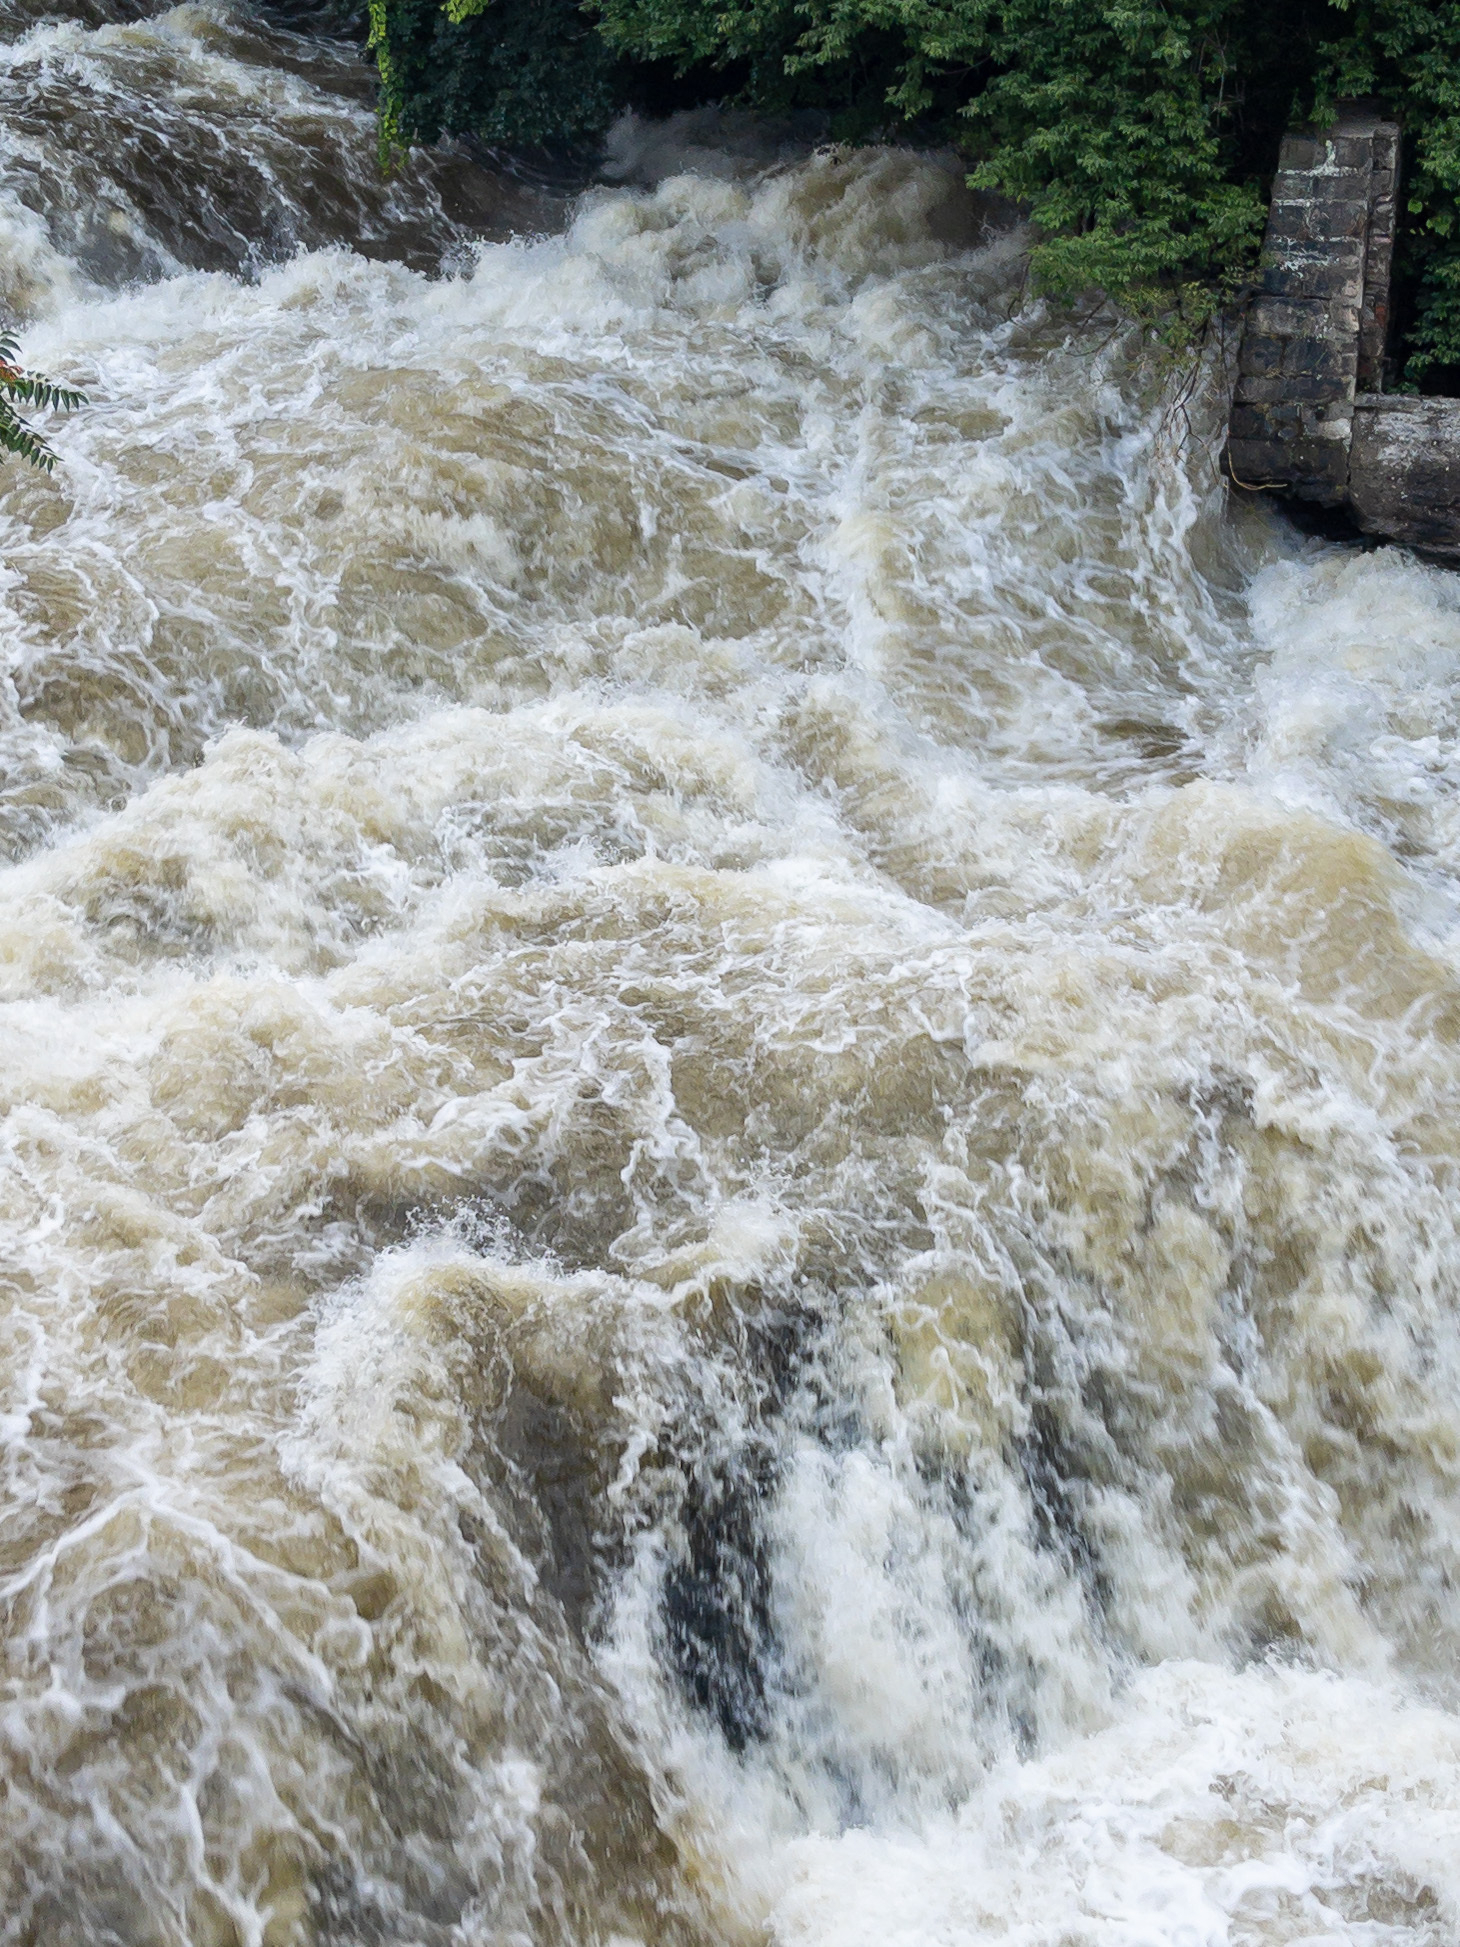 Violent rapids in creek after rains in the northeast US.